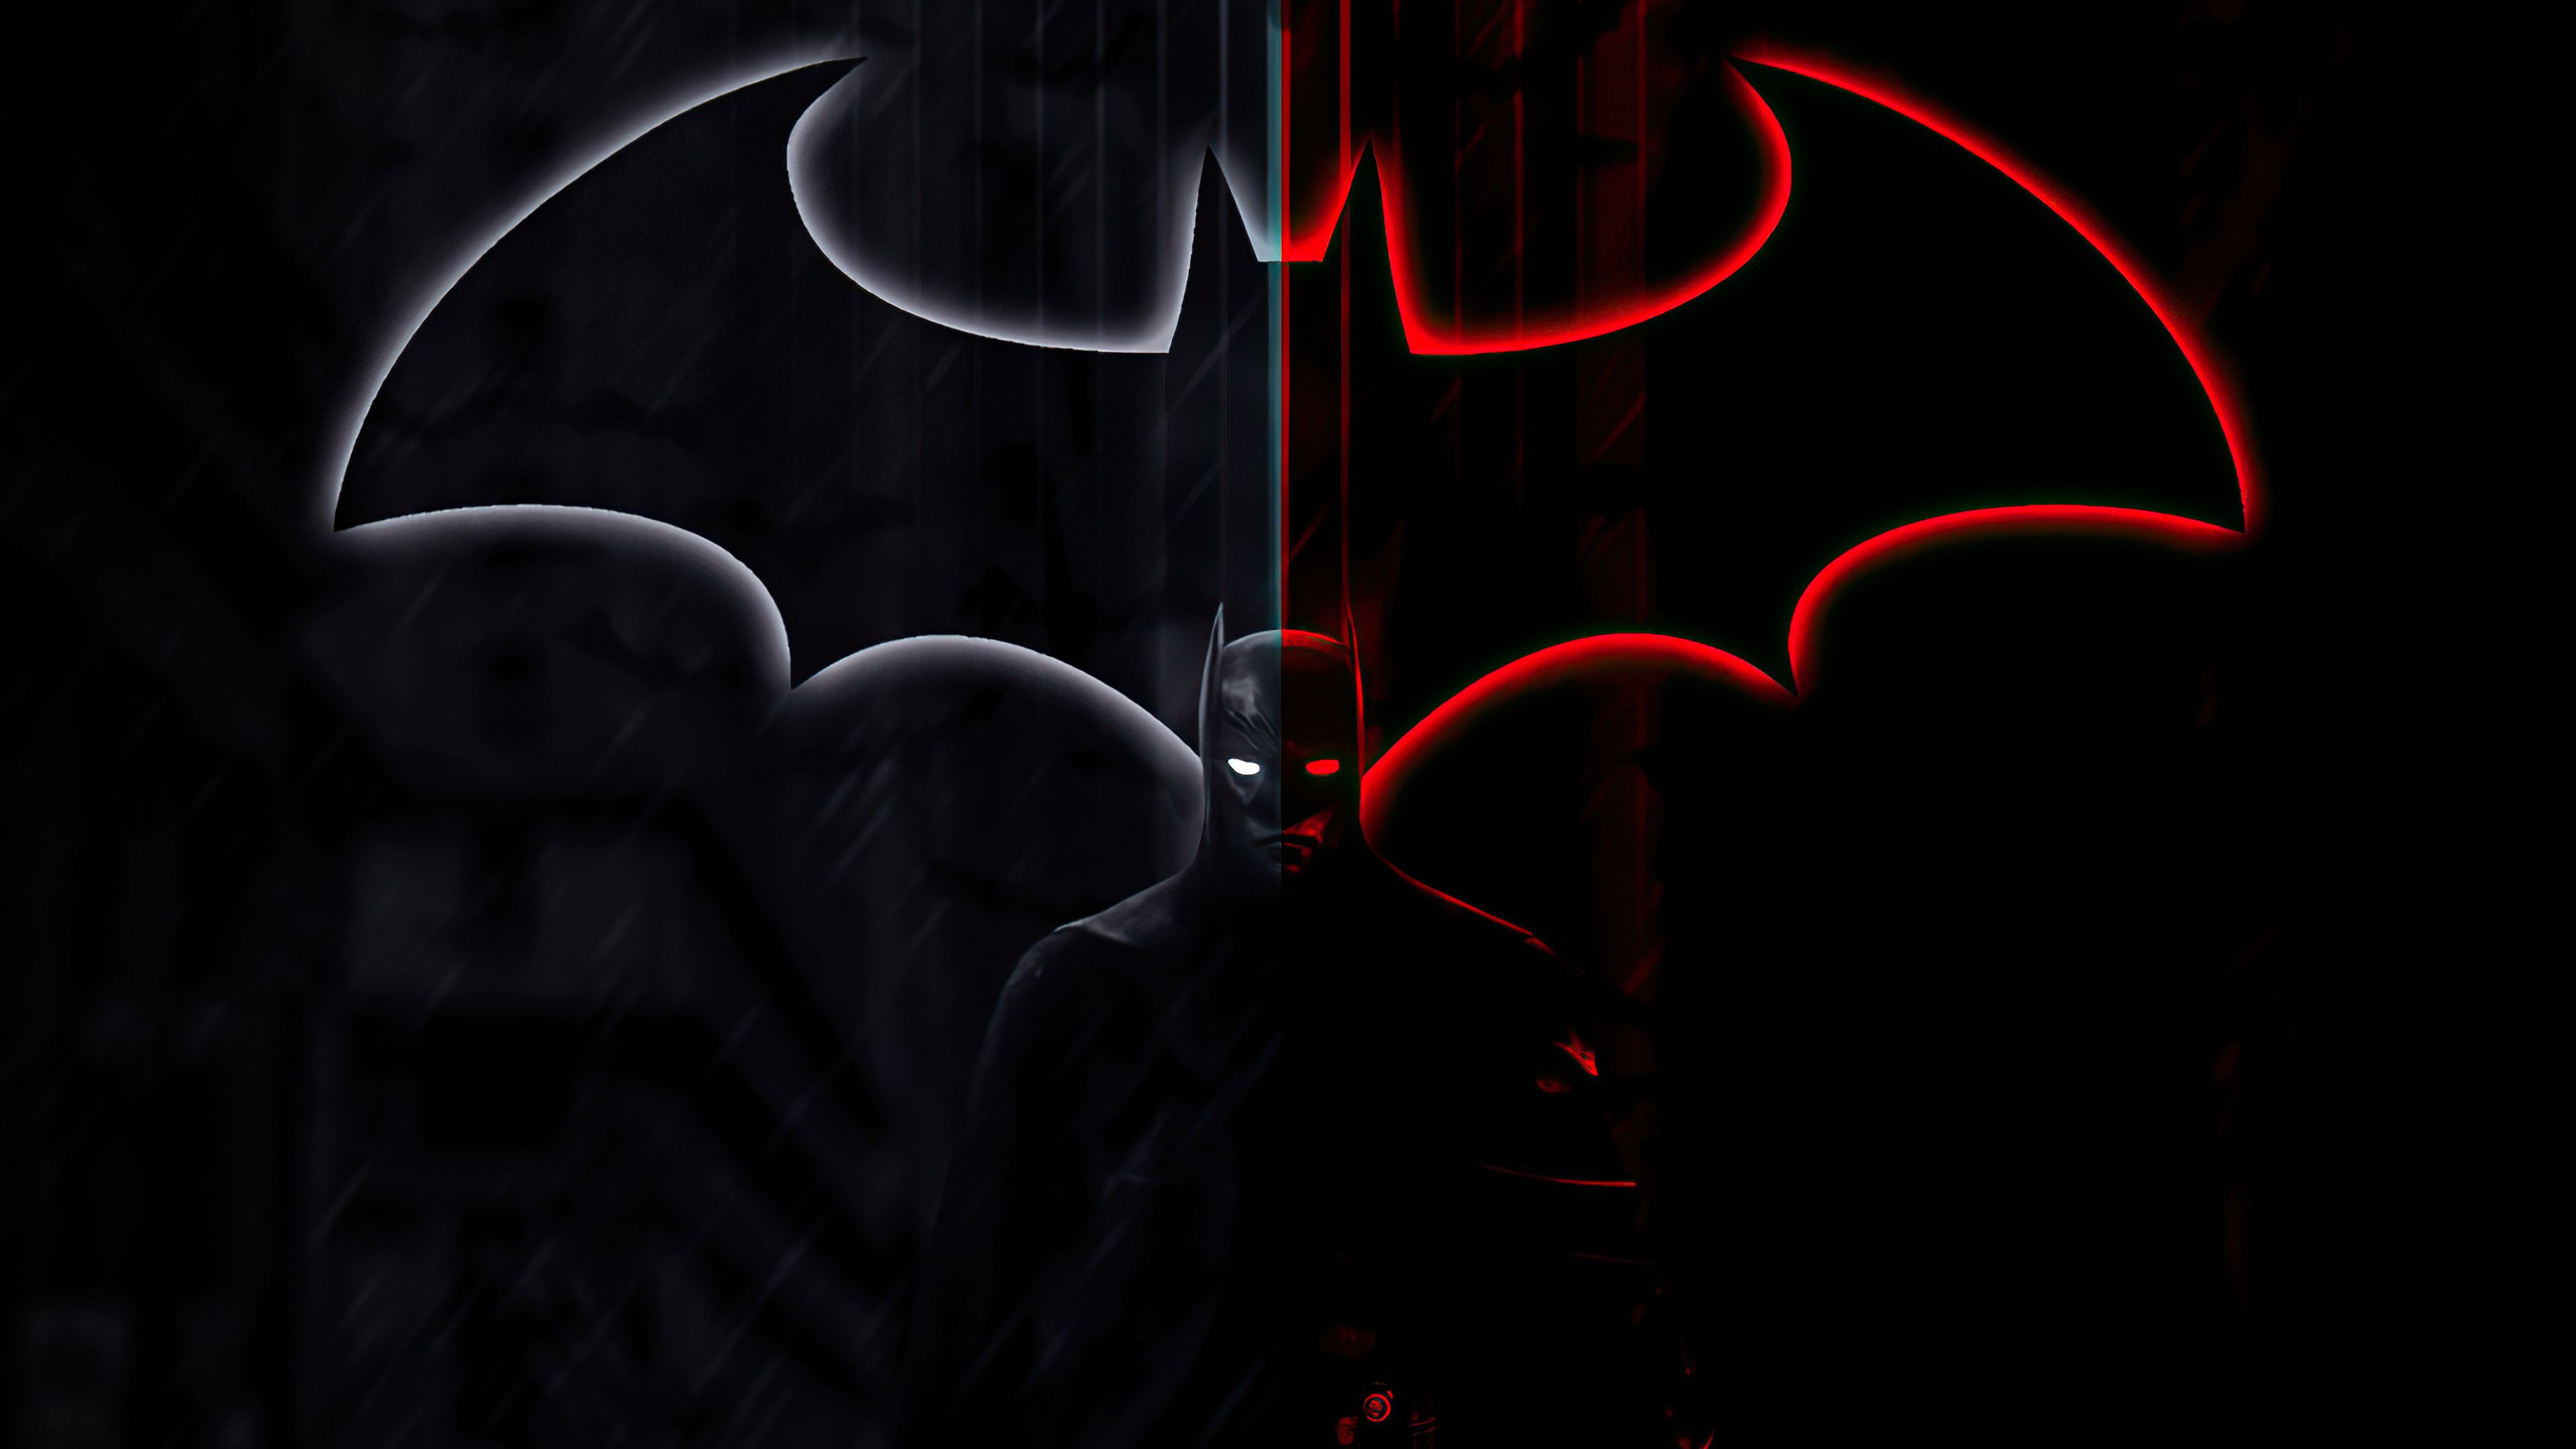  Batman Hintergrundbild 3840x2160. Batman 4k Cool Wallpaper, HD Minimalist 4K Wallpaper, Image, Photo and Background